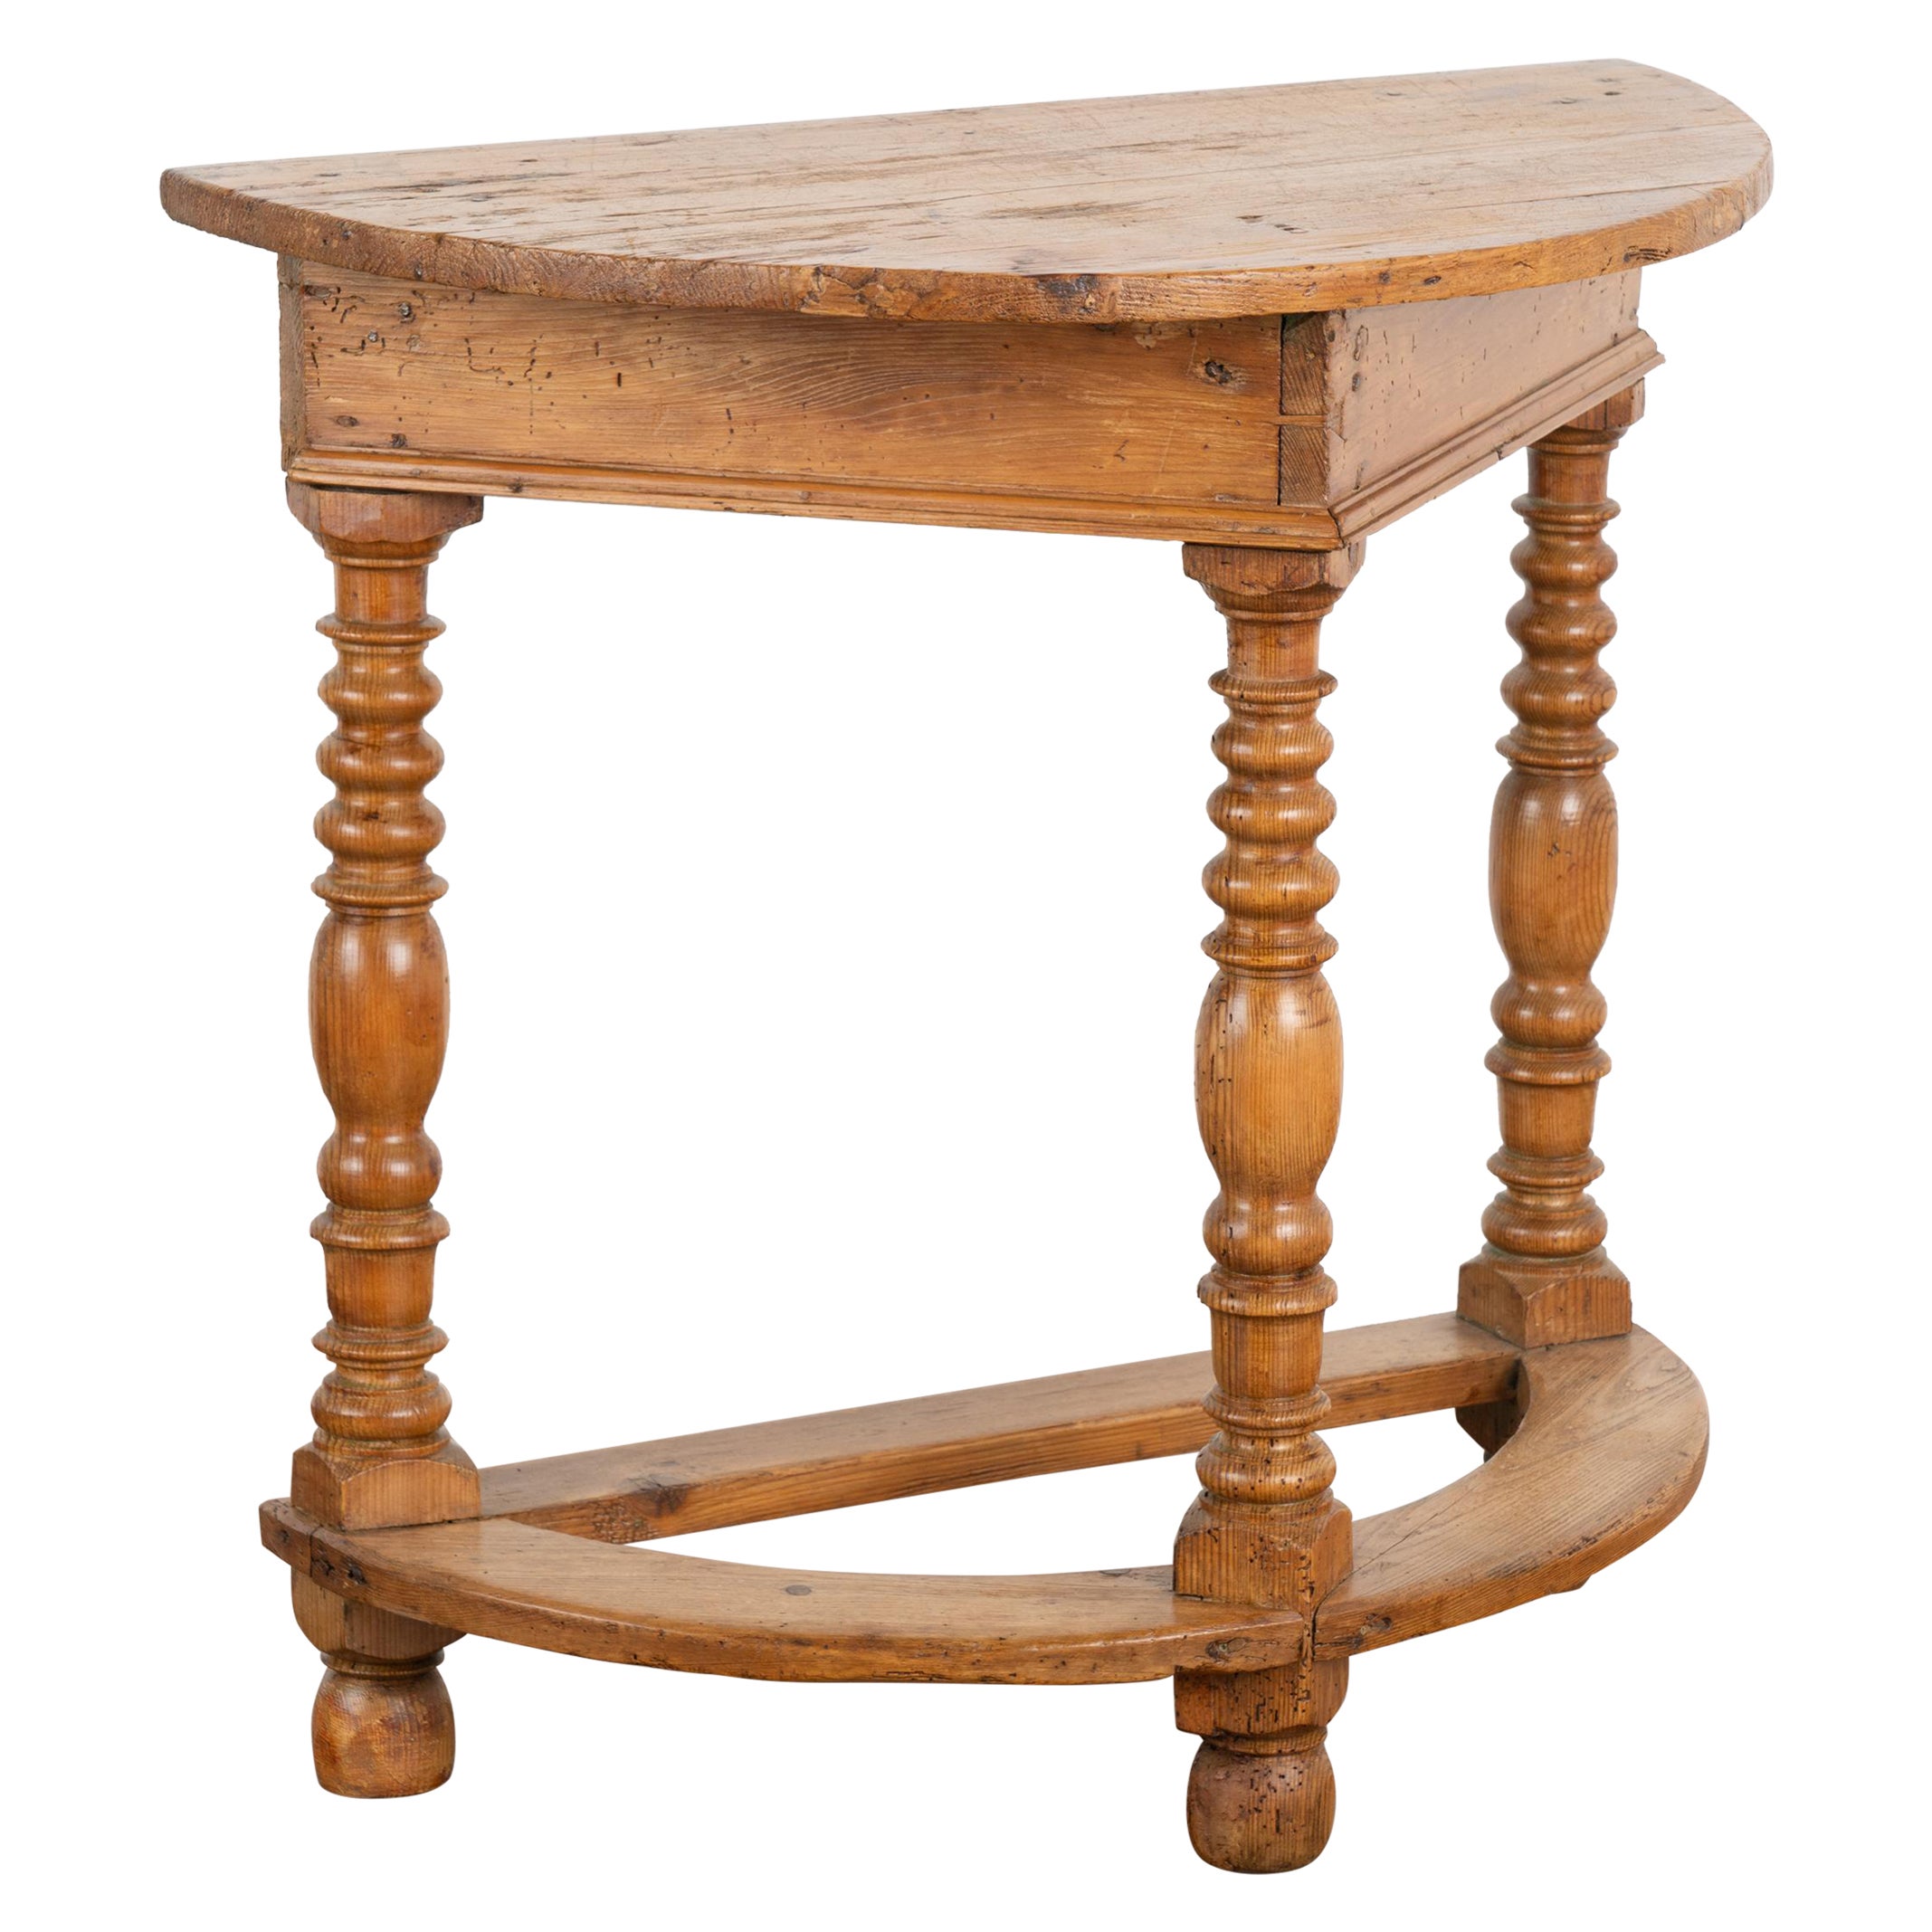 Pine Three Leg Side Table, Austria circa 1800-20